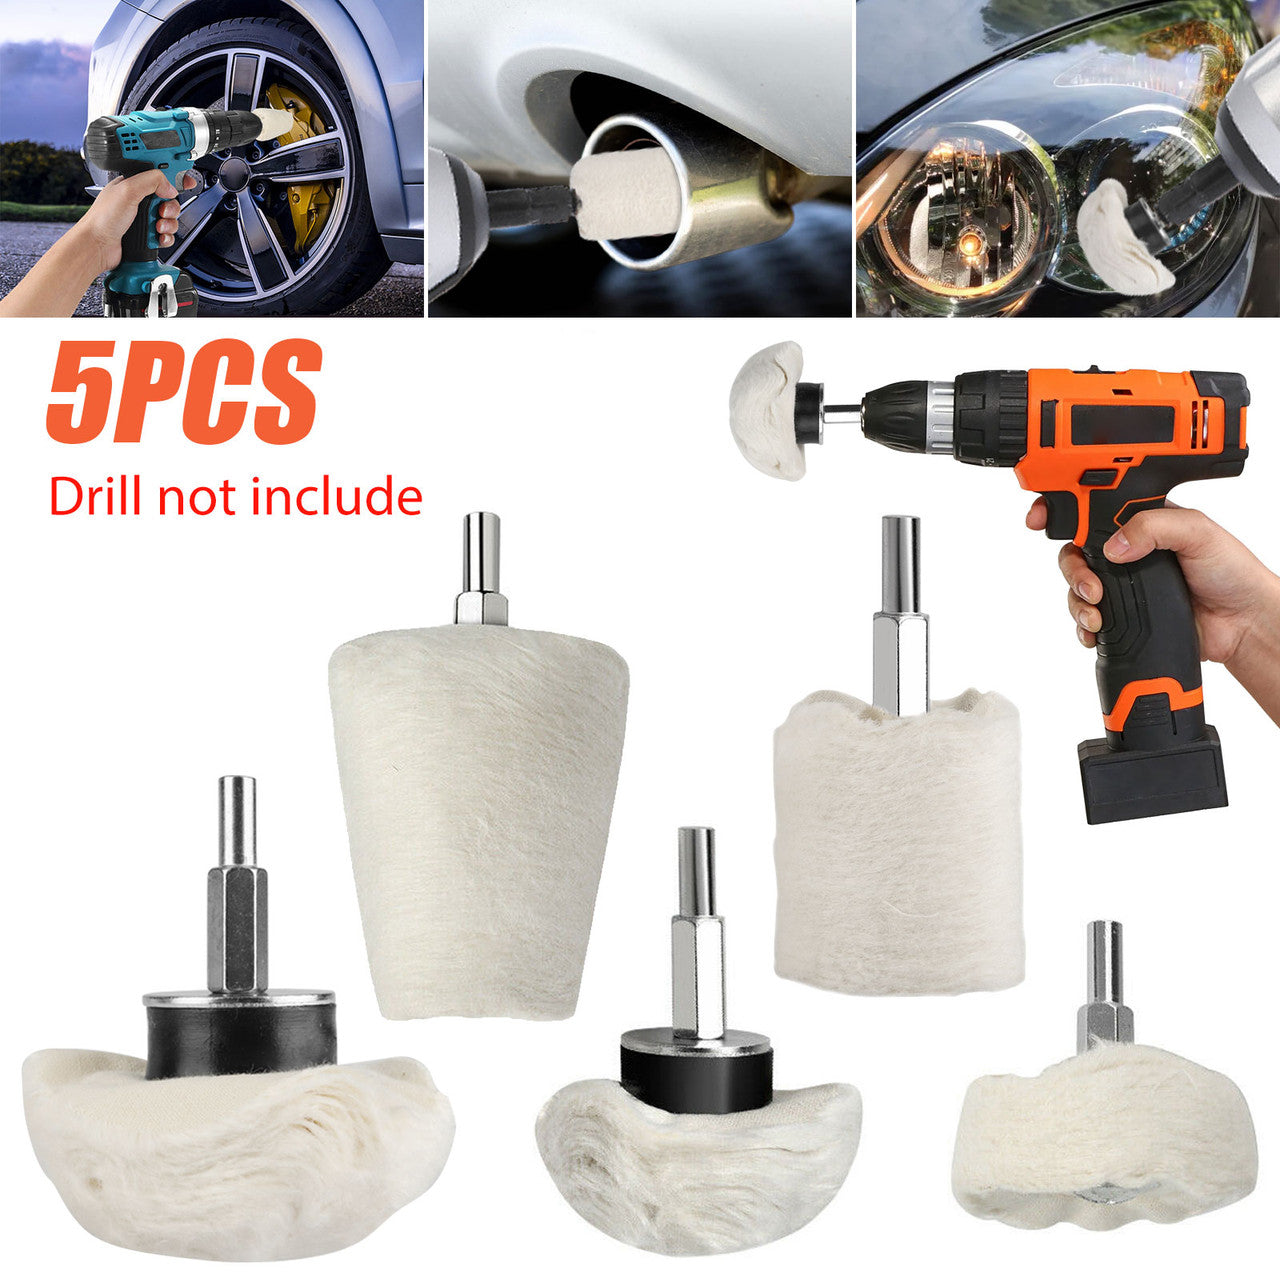 White Cotton Buffing Polishing Mop Wheel Pads Set Kit for Car Auto Vehicle, 5PC